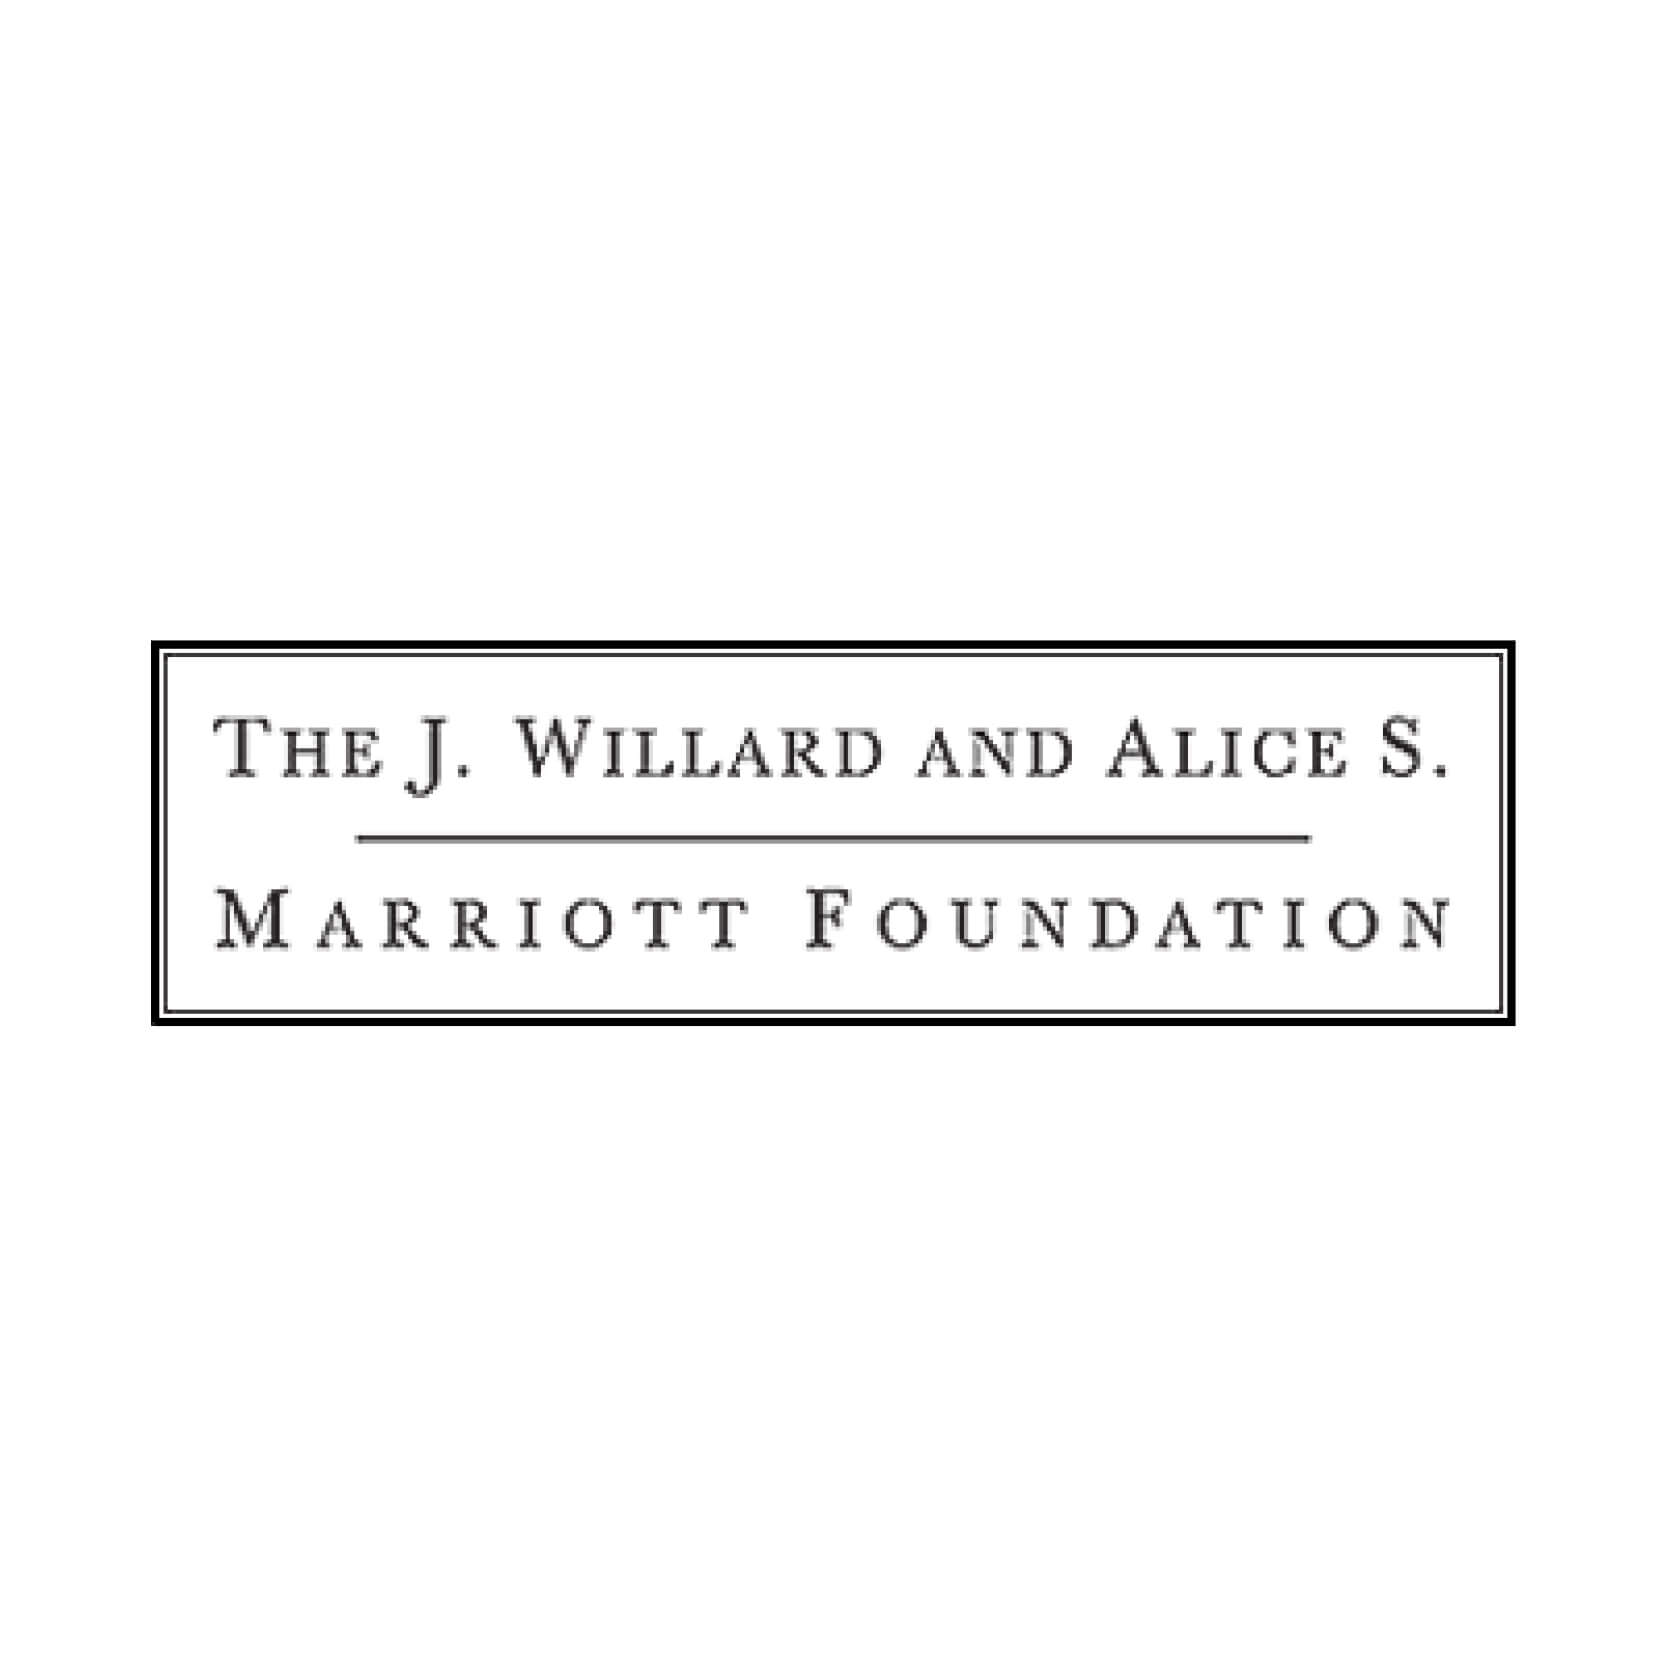 The J. Willard and Alice S. Marriott Foundation